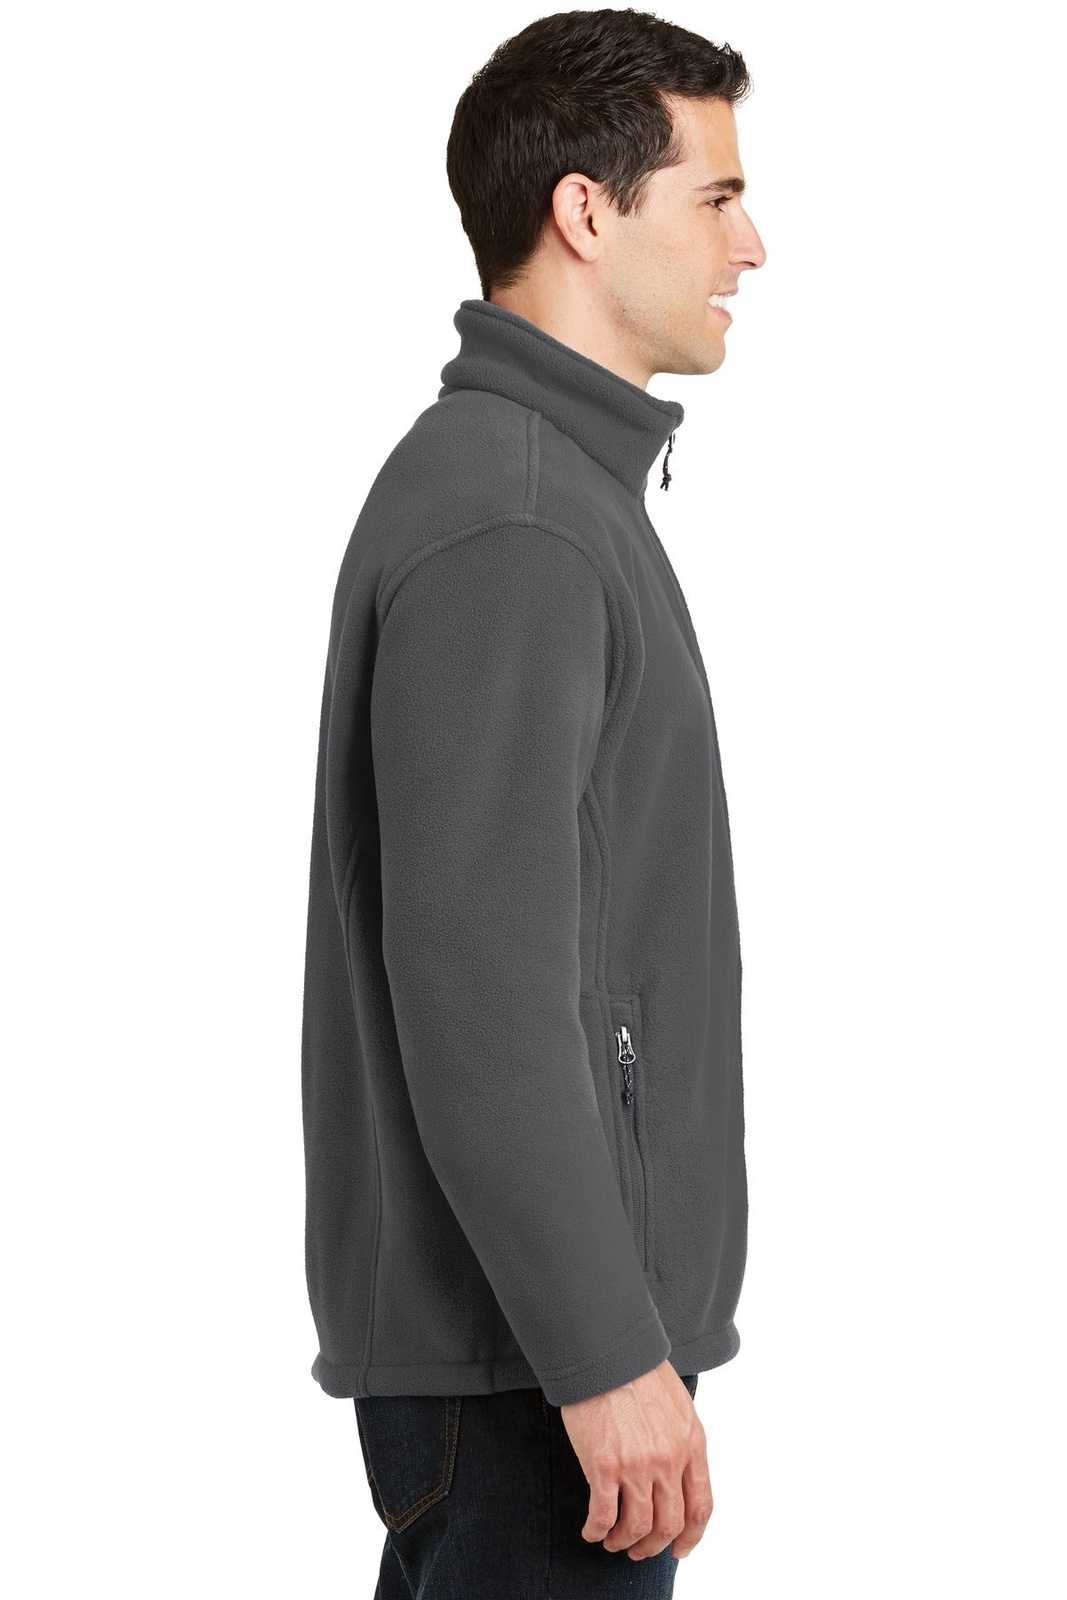 Port Authority F217 Value Fleece Jacket - Iron Gray - HIT a Double - 3